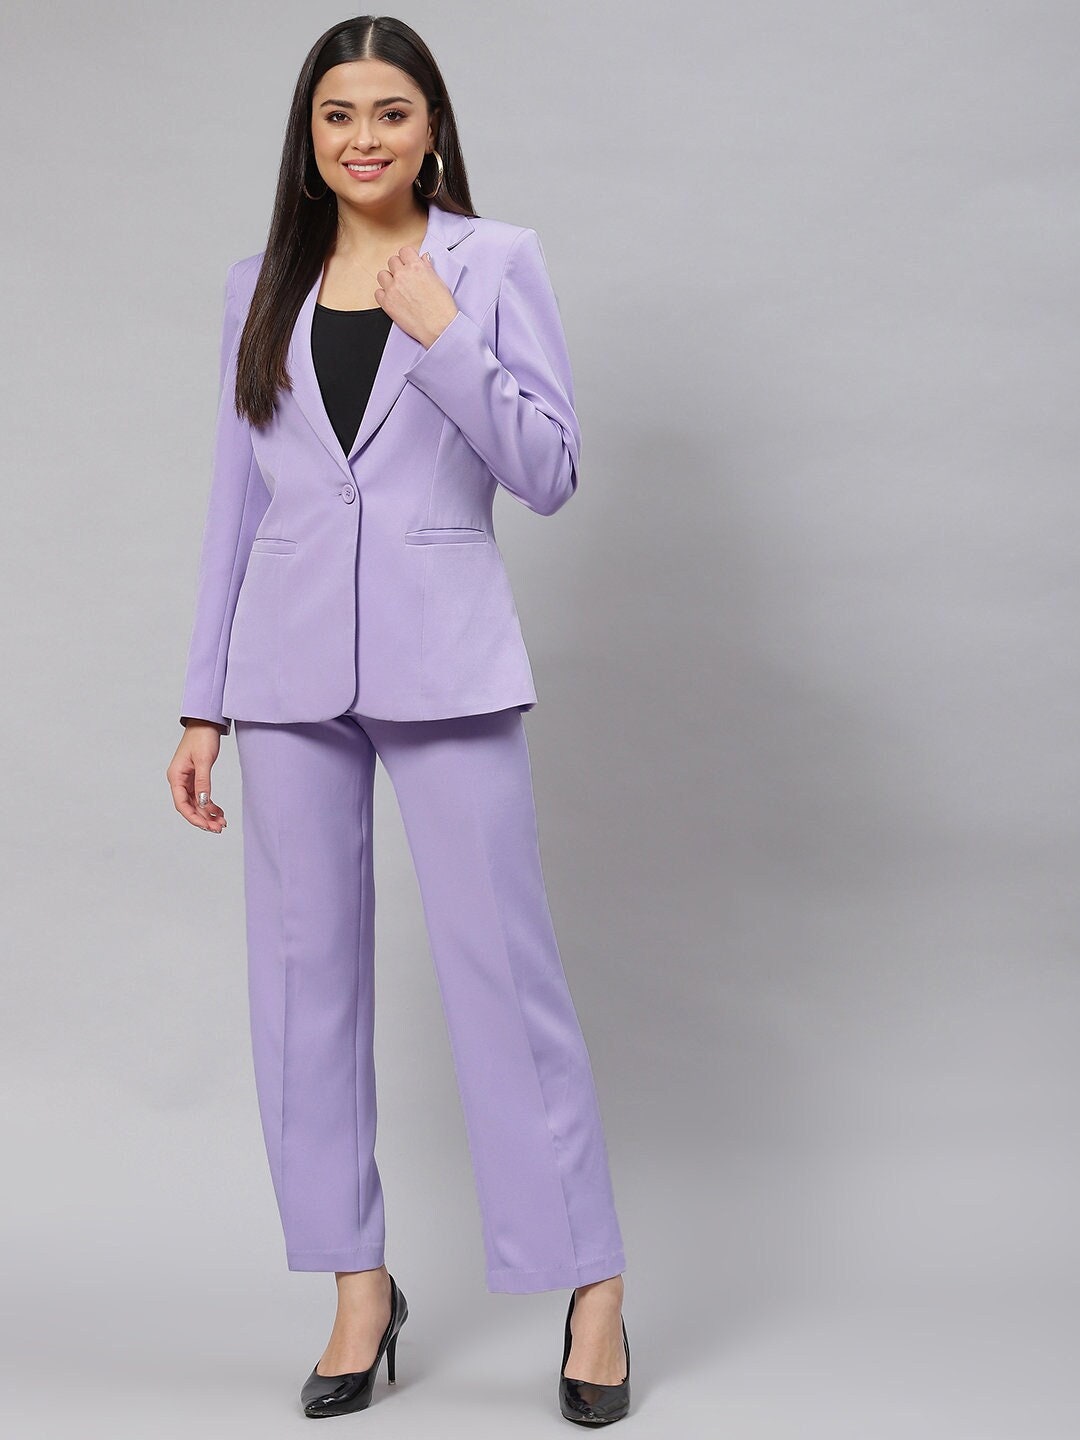 Lavender Stretch Pantsuit for Women, Two Piece Deep V Blazer